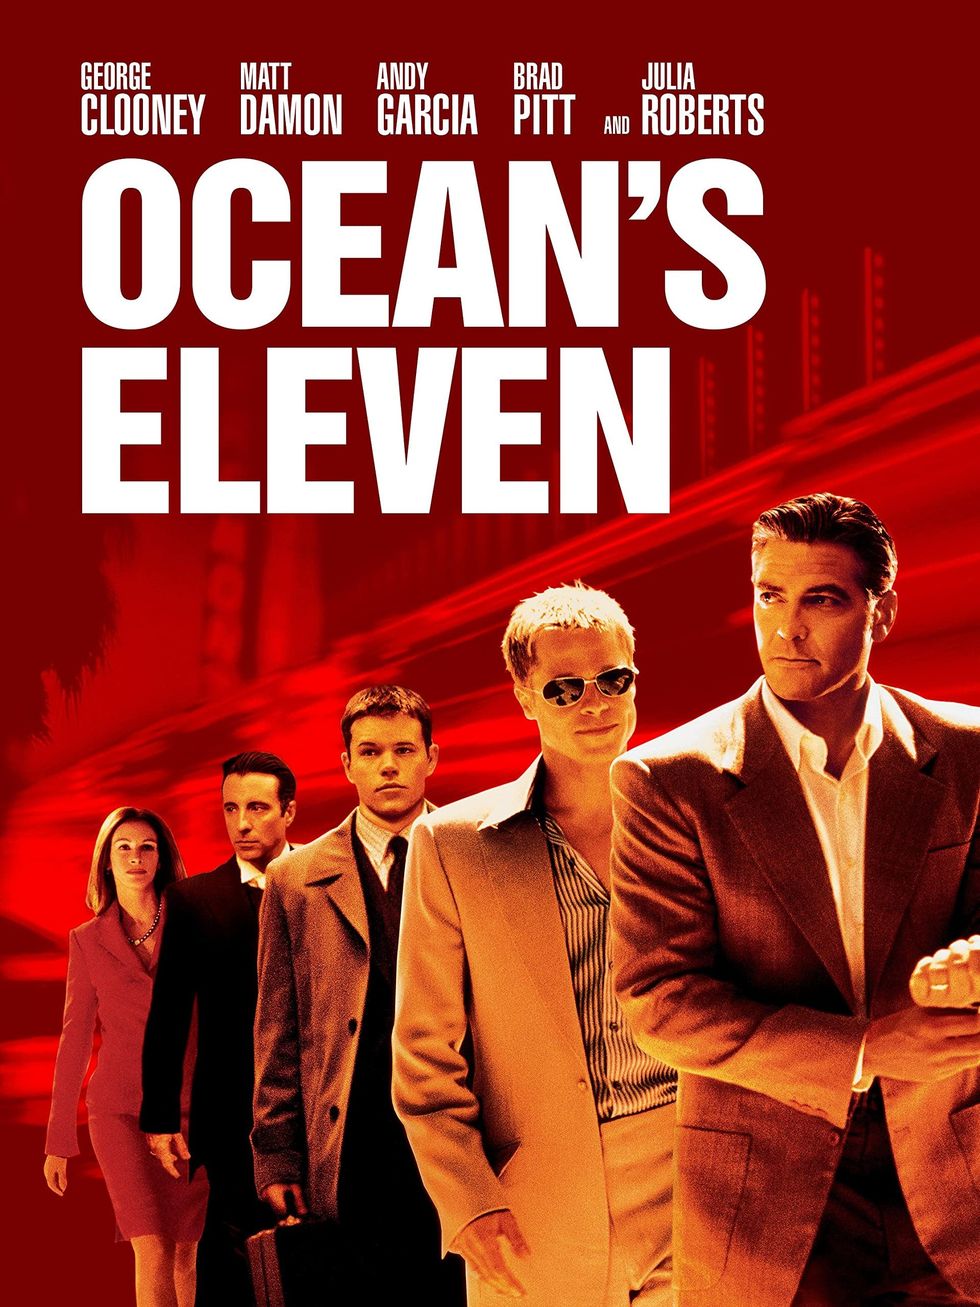 ocean's 11 movie poster